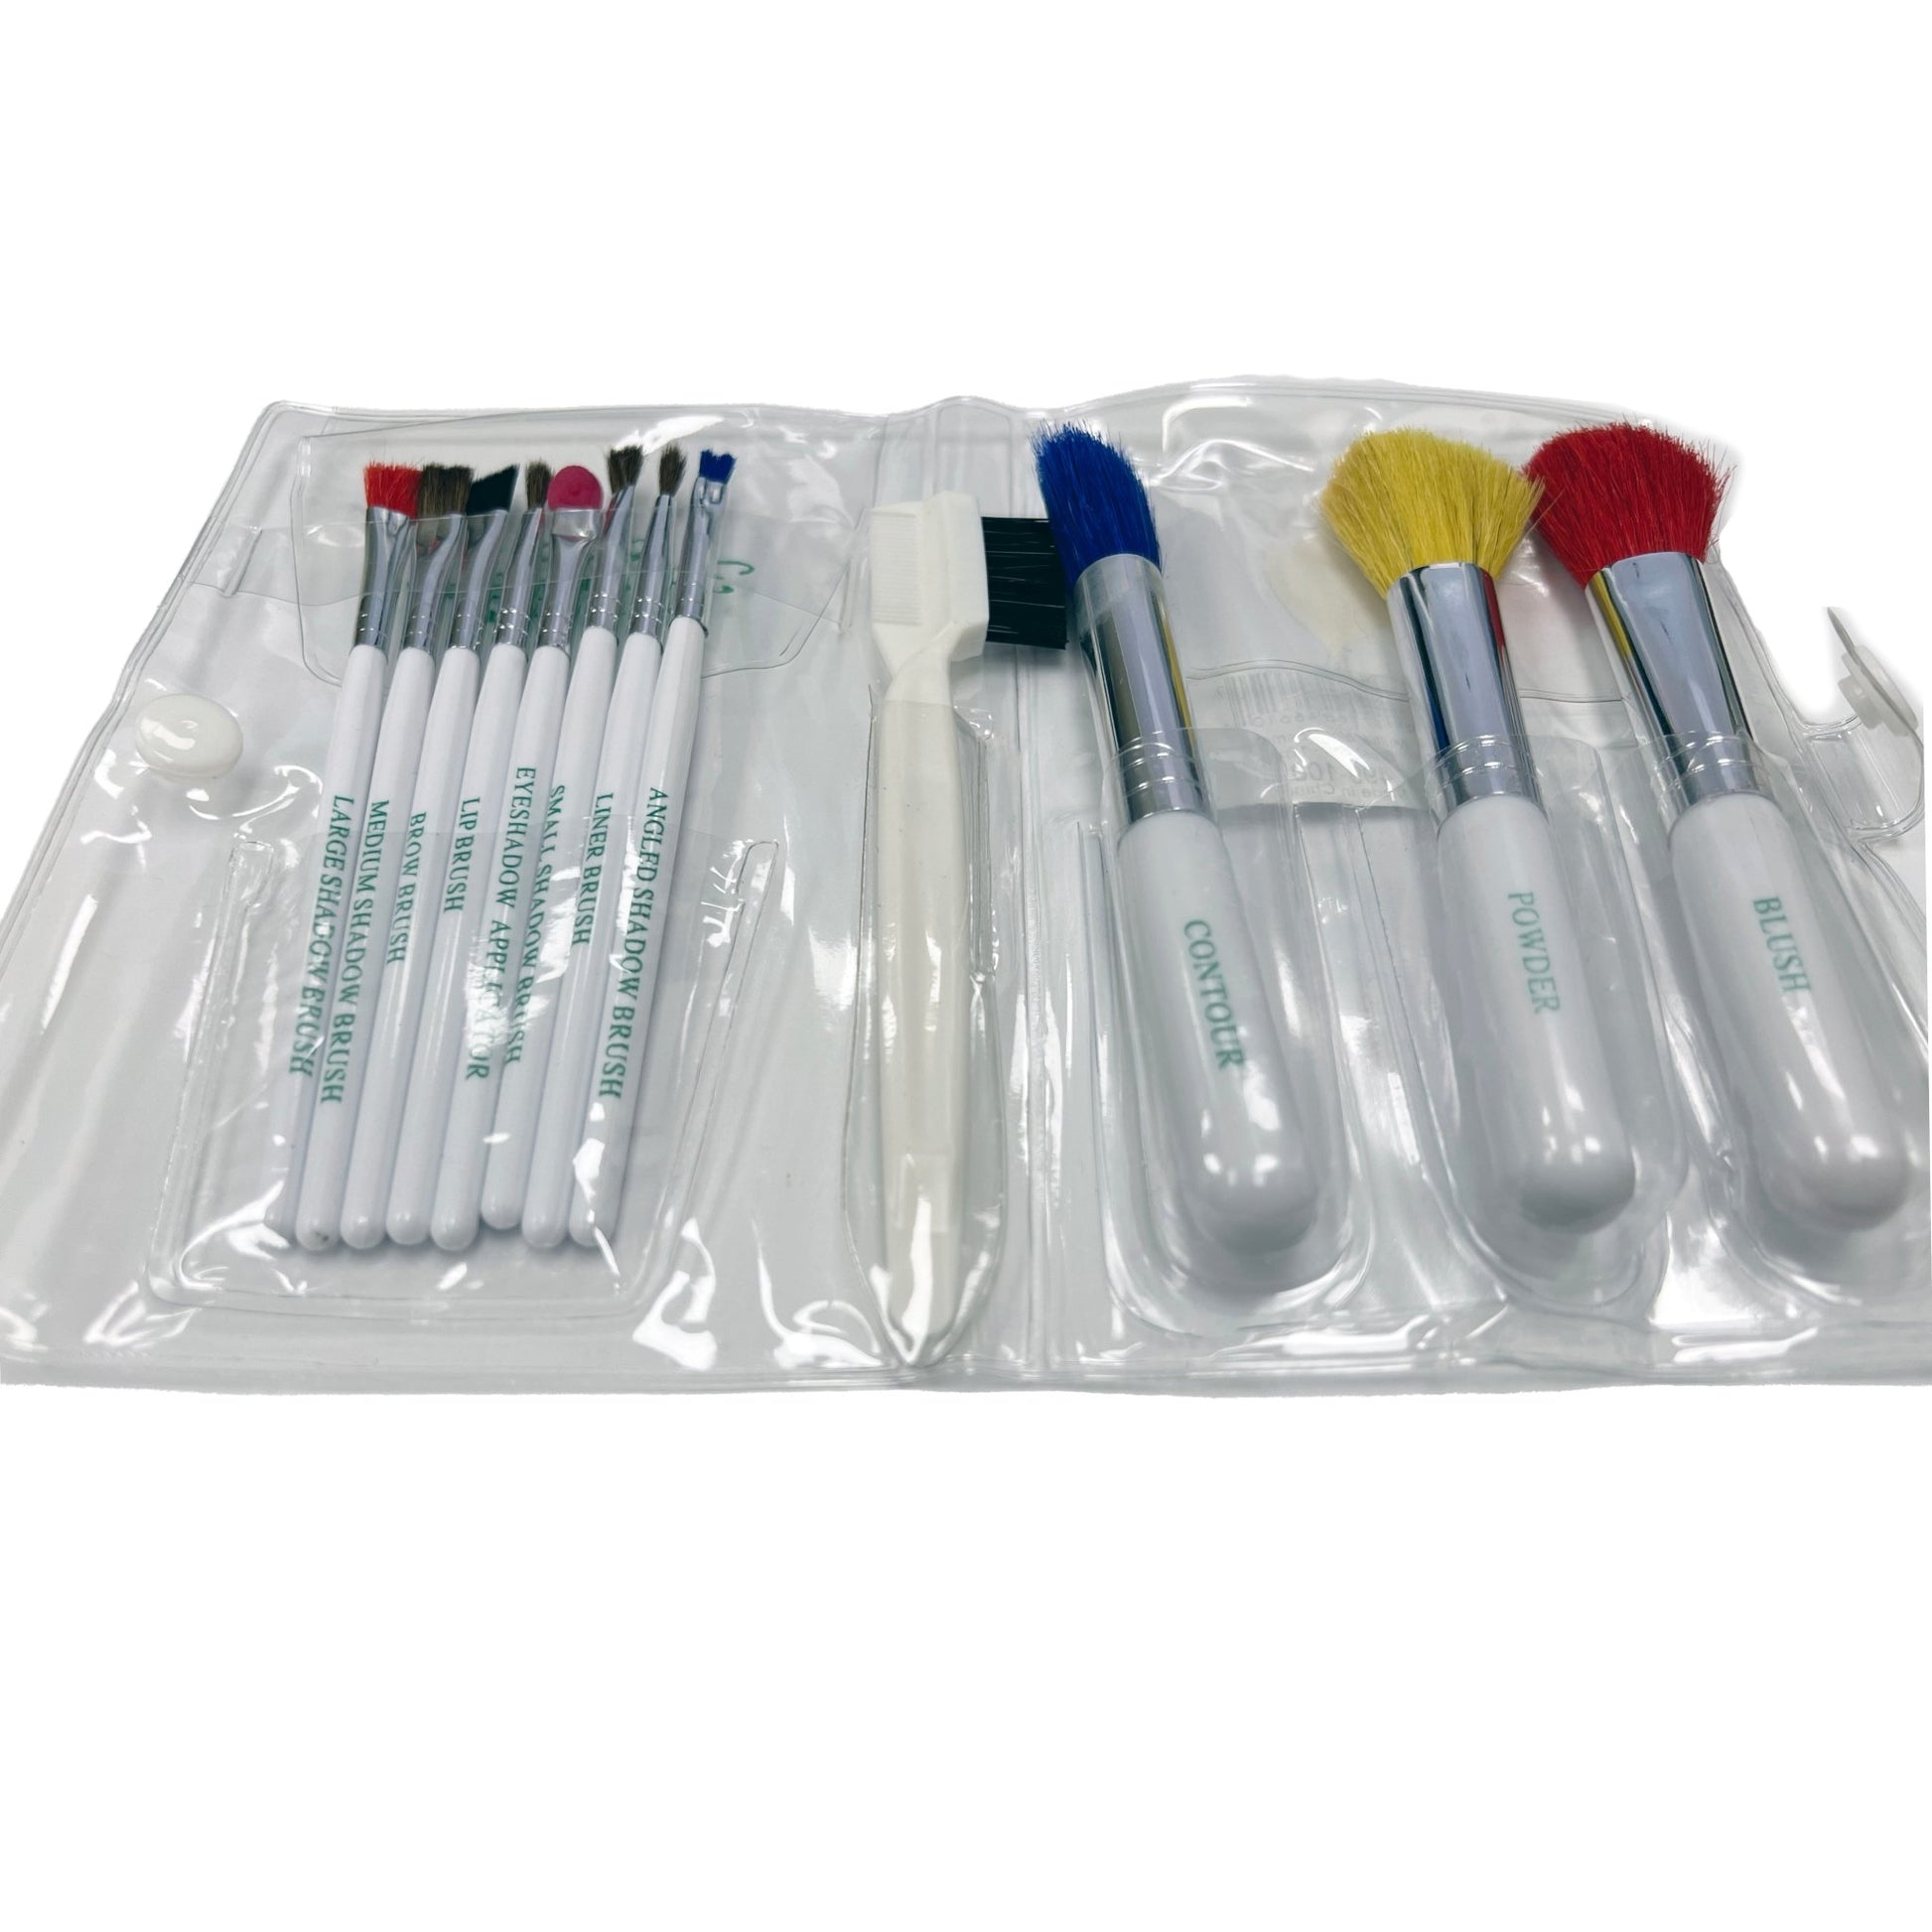 Multi Color Cosmetic Brush Set | 12pc | FANTASEA COSMETICS - SH Salons